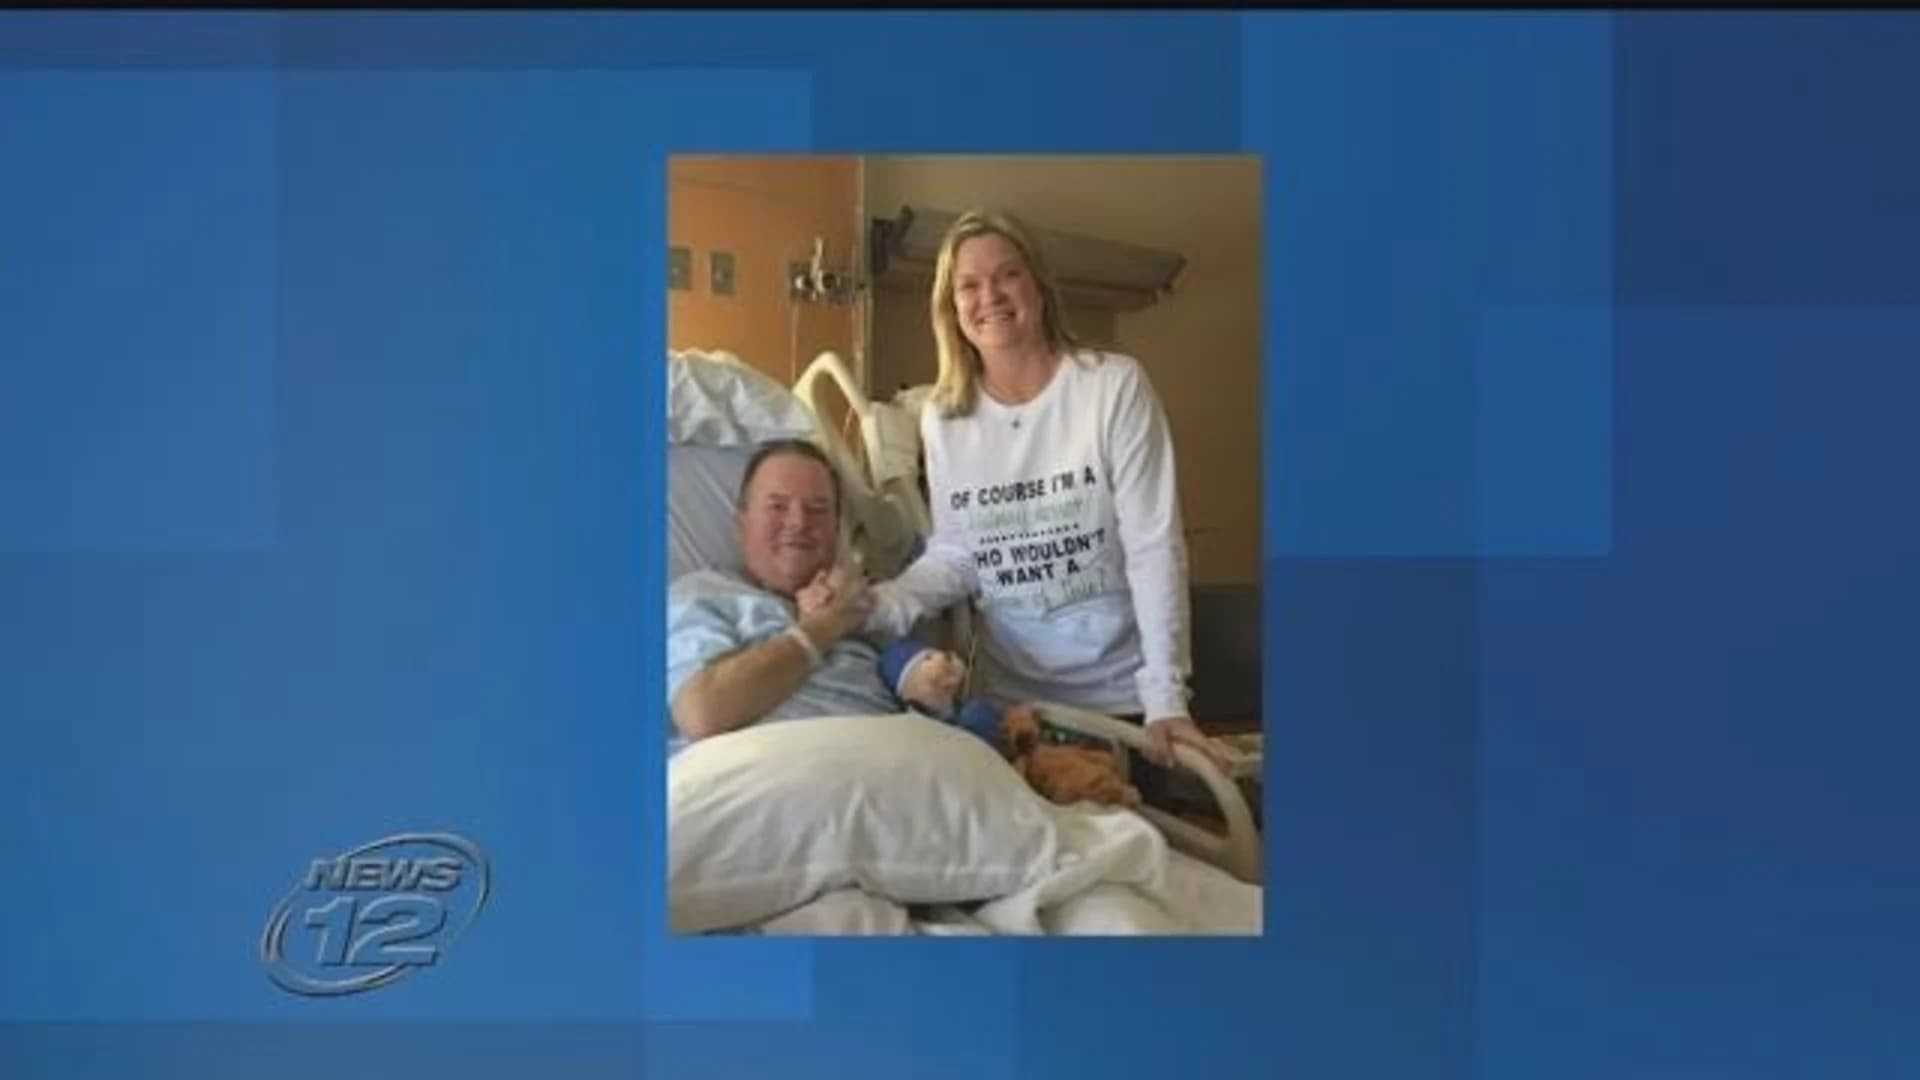 Really good neighbor: Woman donates kidney to save man's life